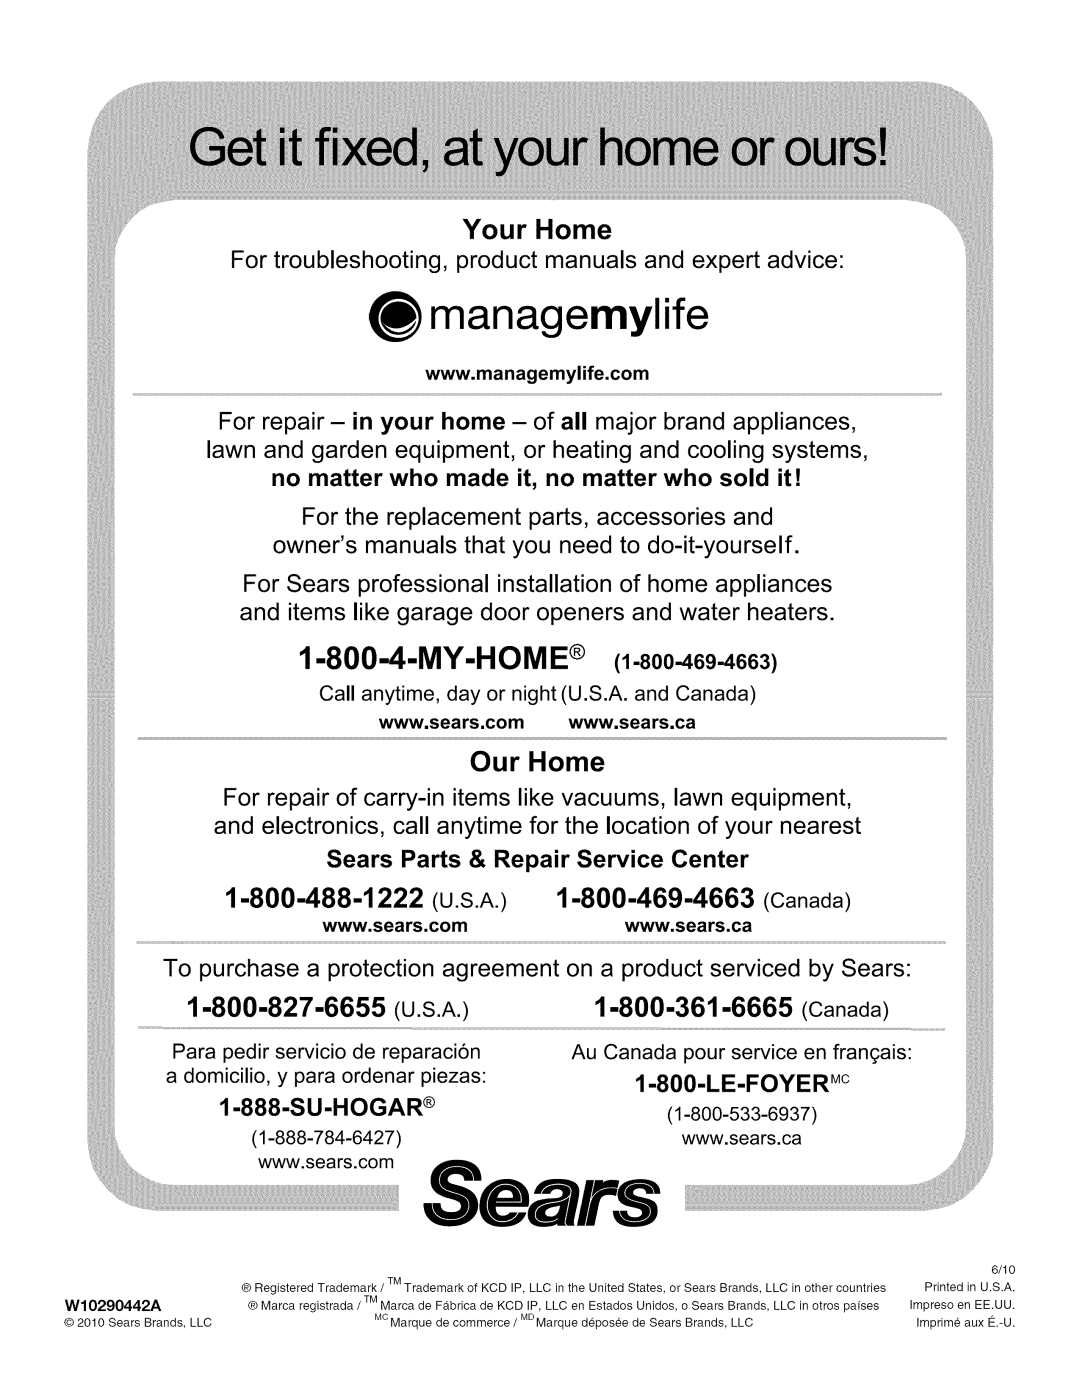 Kenmore 665.1404 manual My-Home, Su-Hogar, Sears, managemylife, Your Home, 1-800-827-6655 U.S.A, Canada 